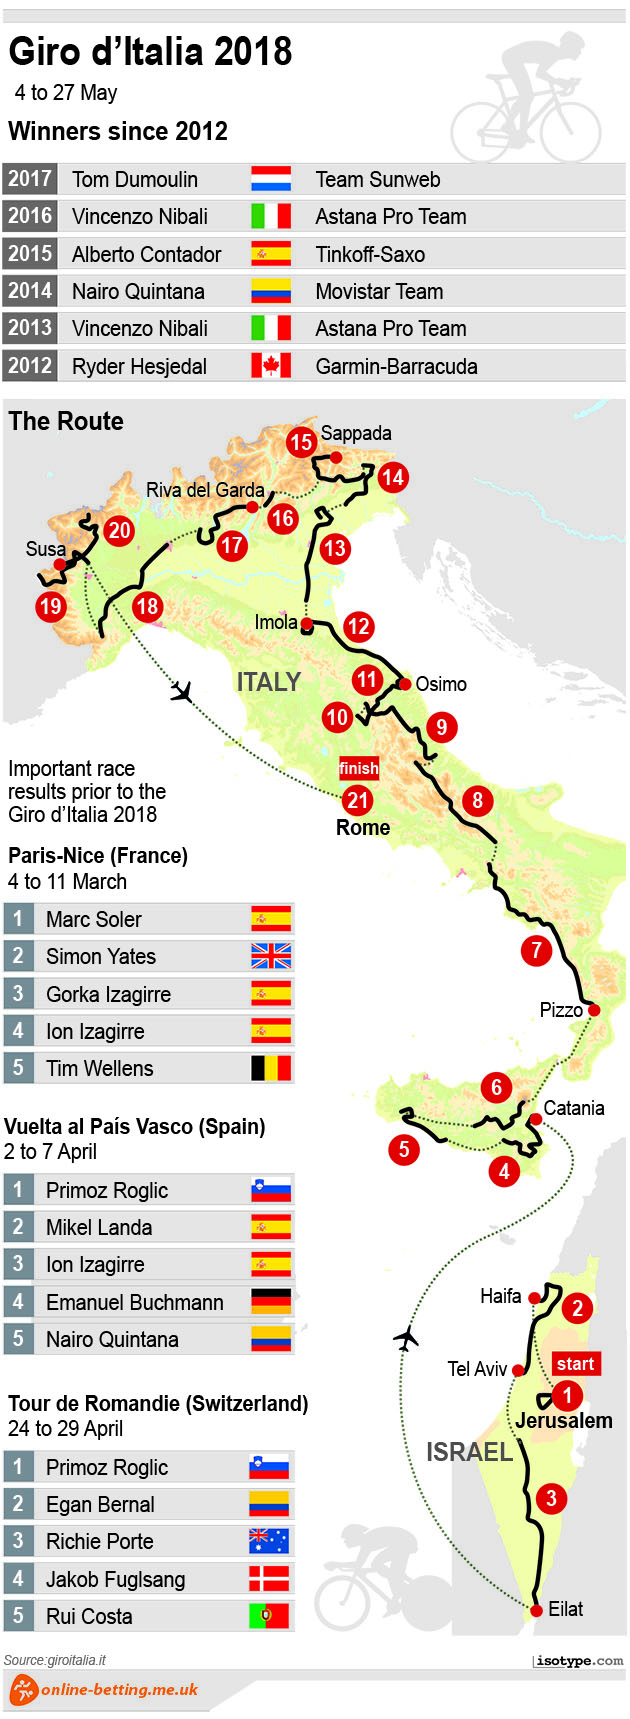 Giro d'Italia 2018 Infographic